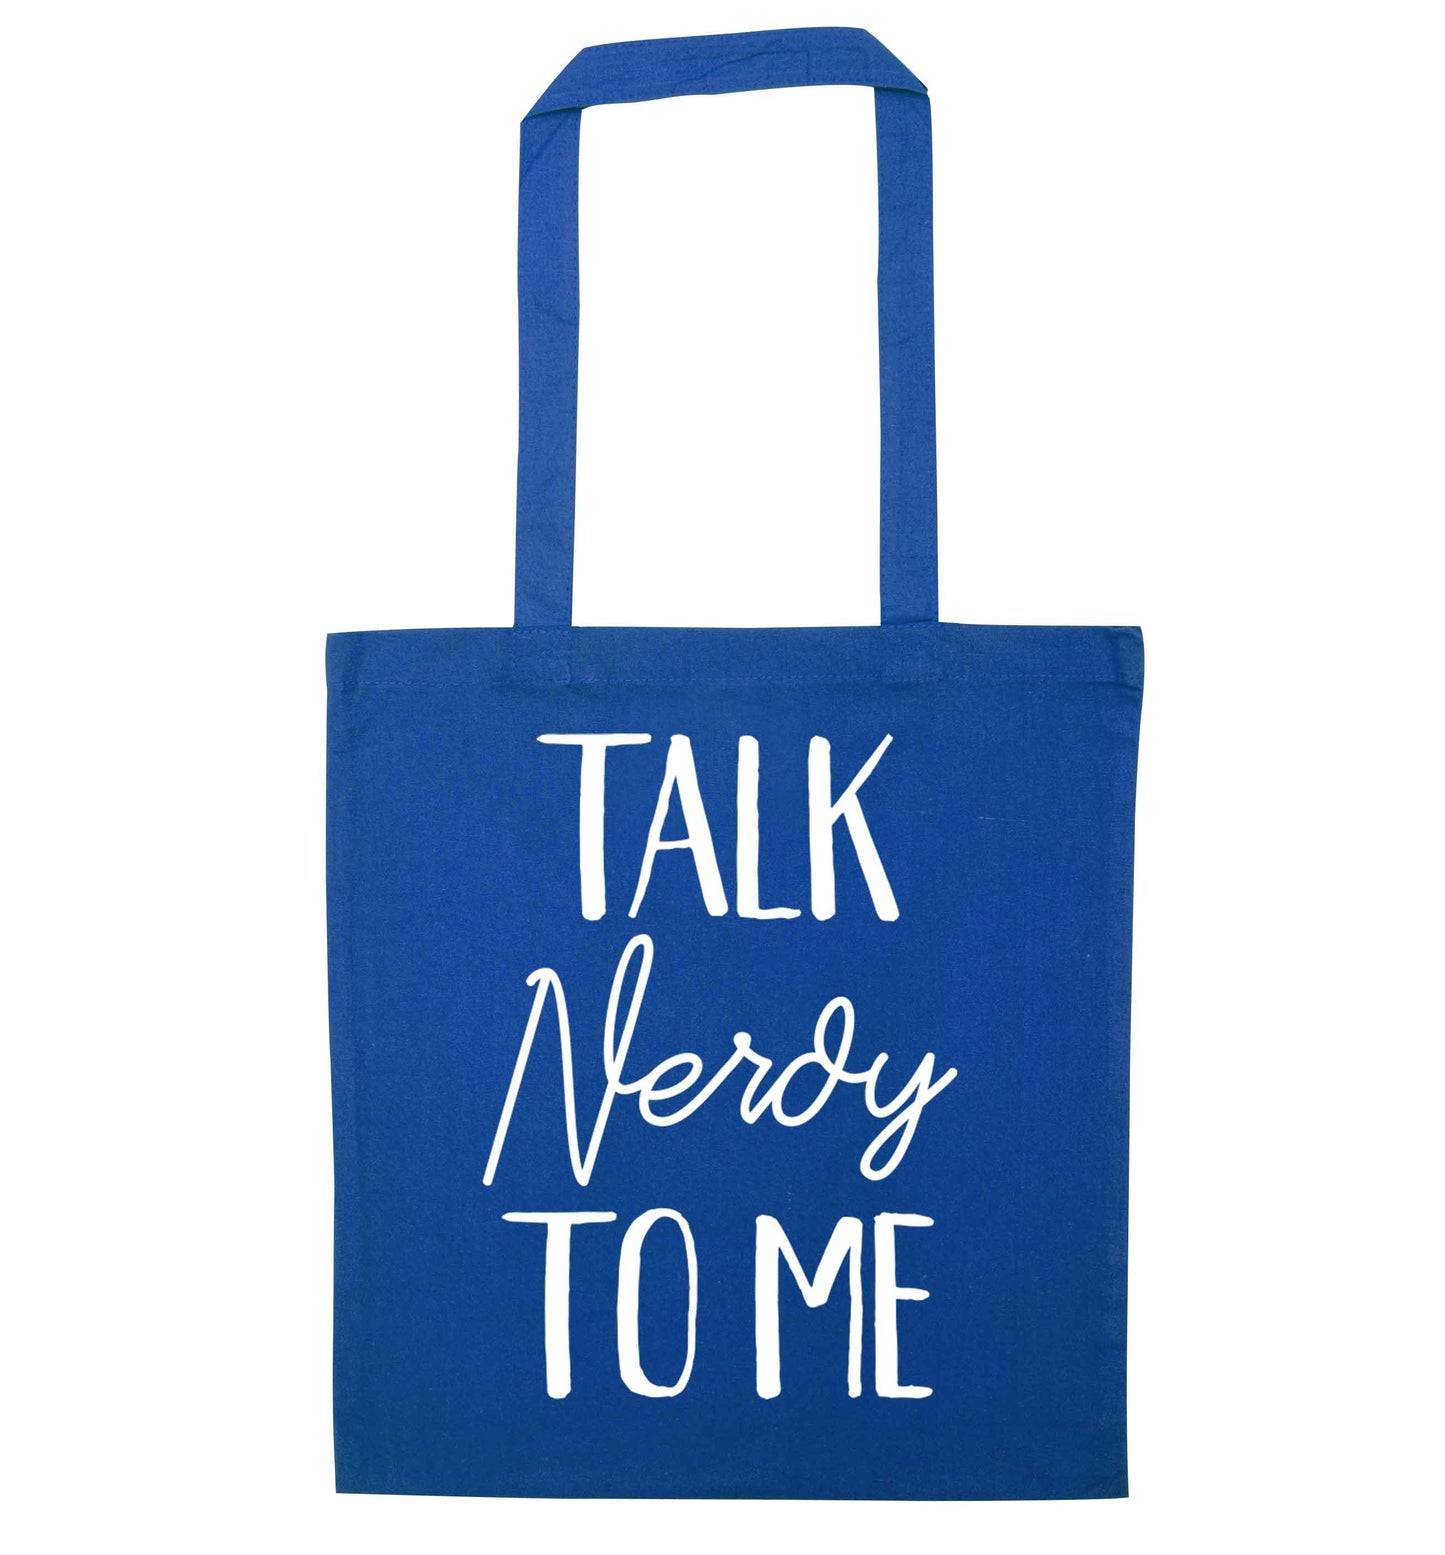 Talk nerdy to me blue tote bag